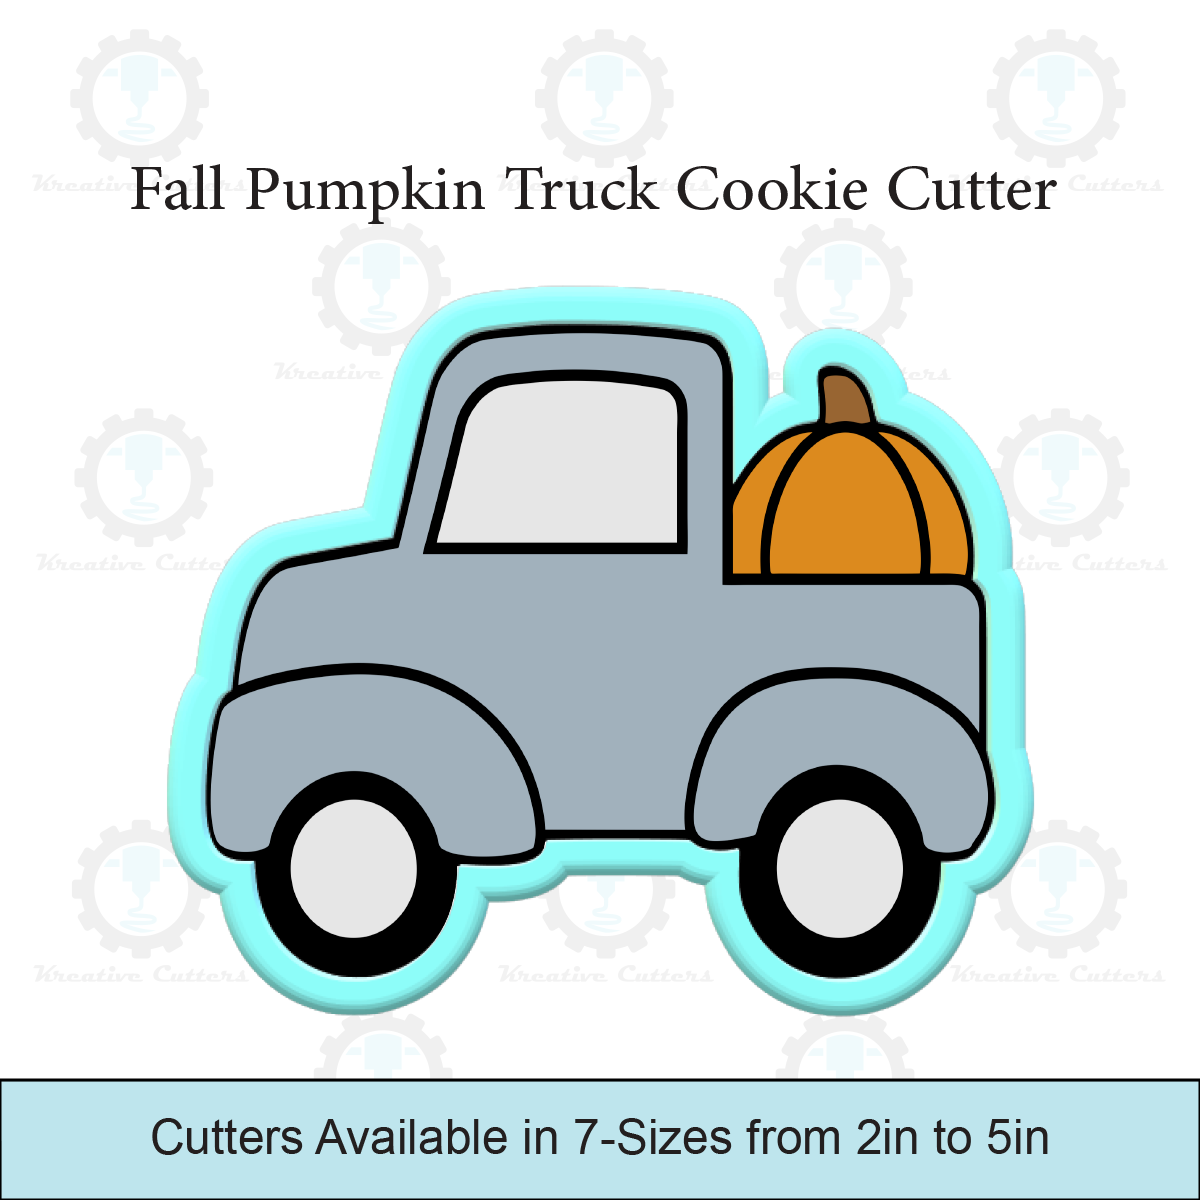 Fall Pumpkin Truck Cookie Cutters